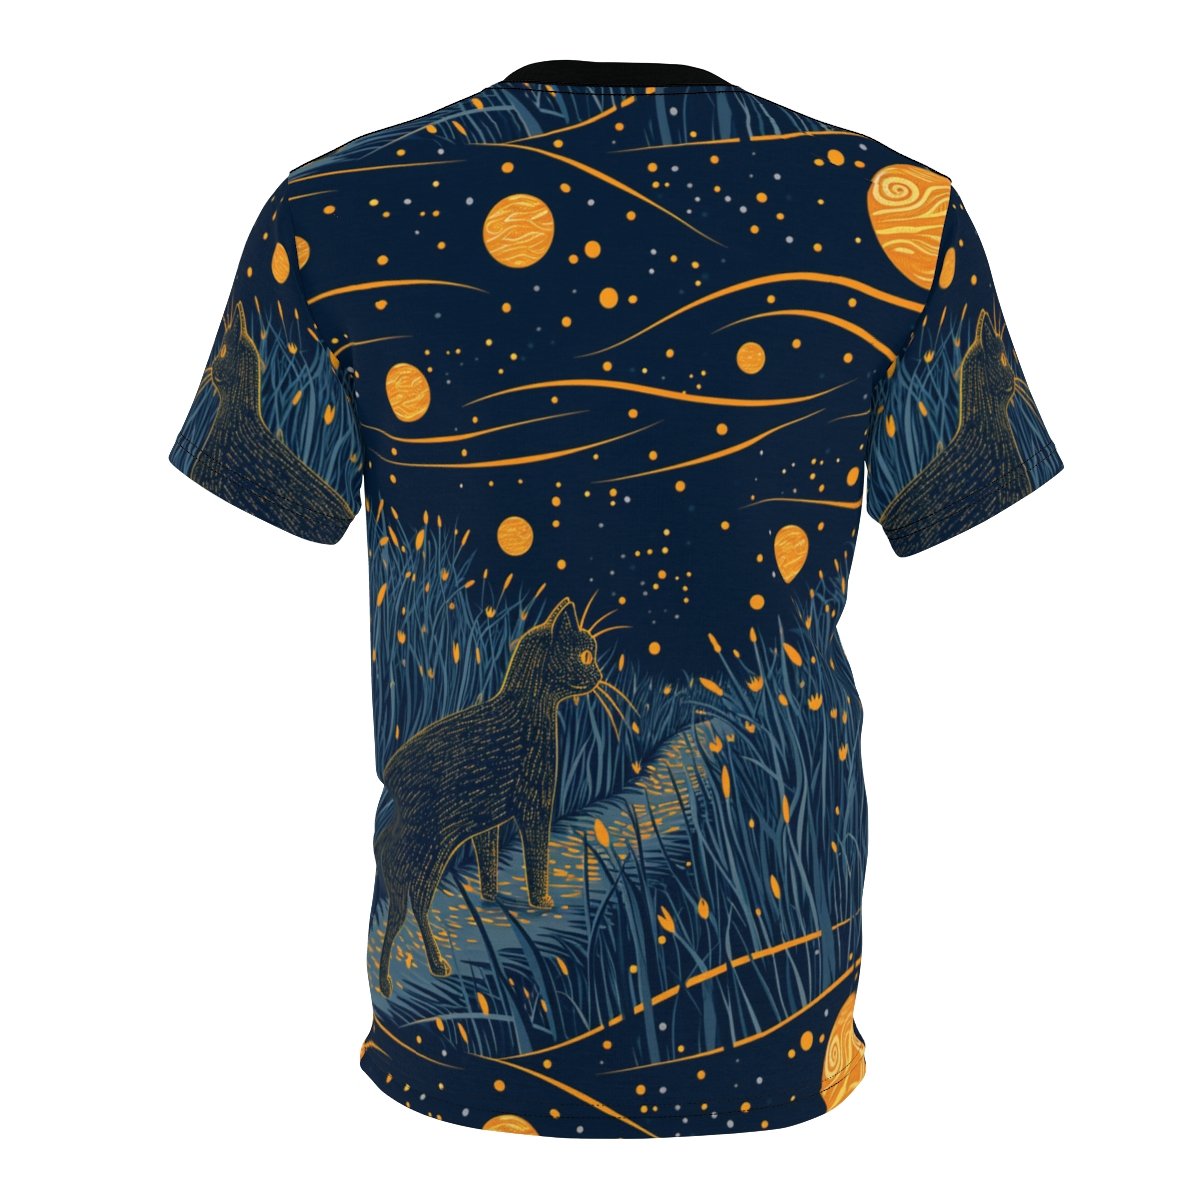 Cat and the Golden Moons - Dark Blue Orange Gold Multi Colors - Unisex T-Shirt - Tee